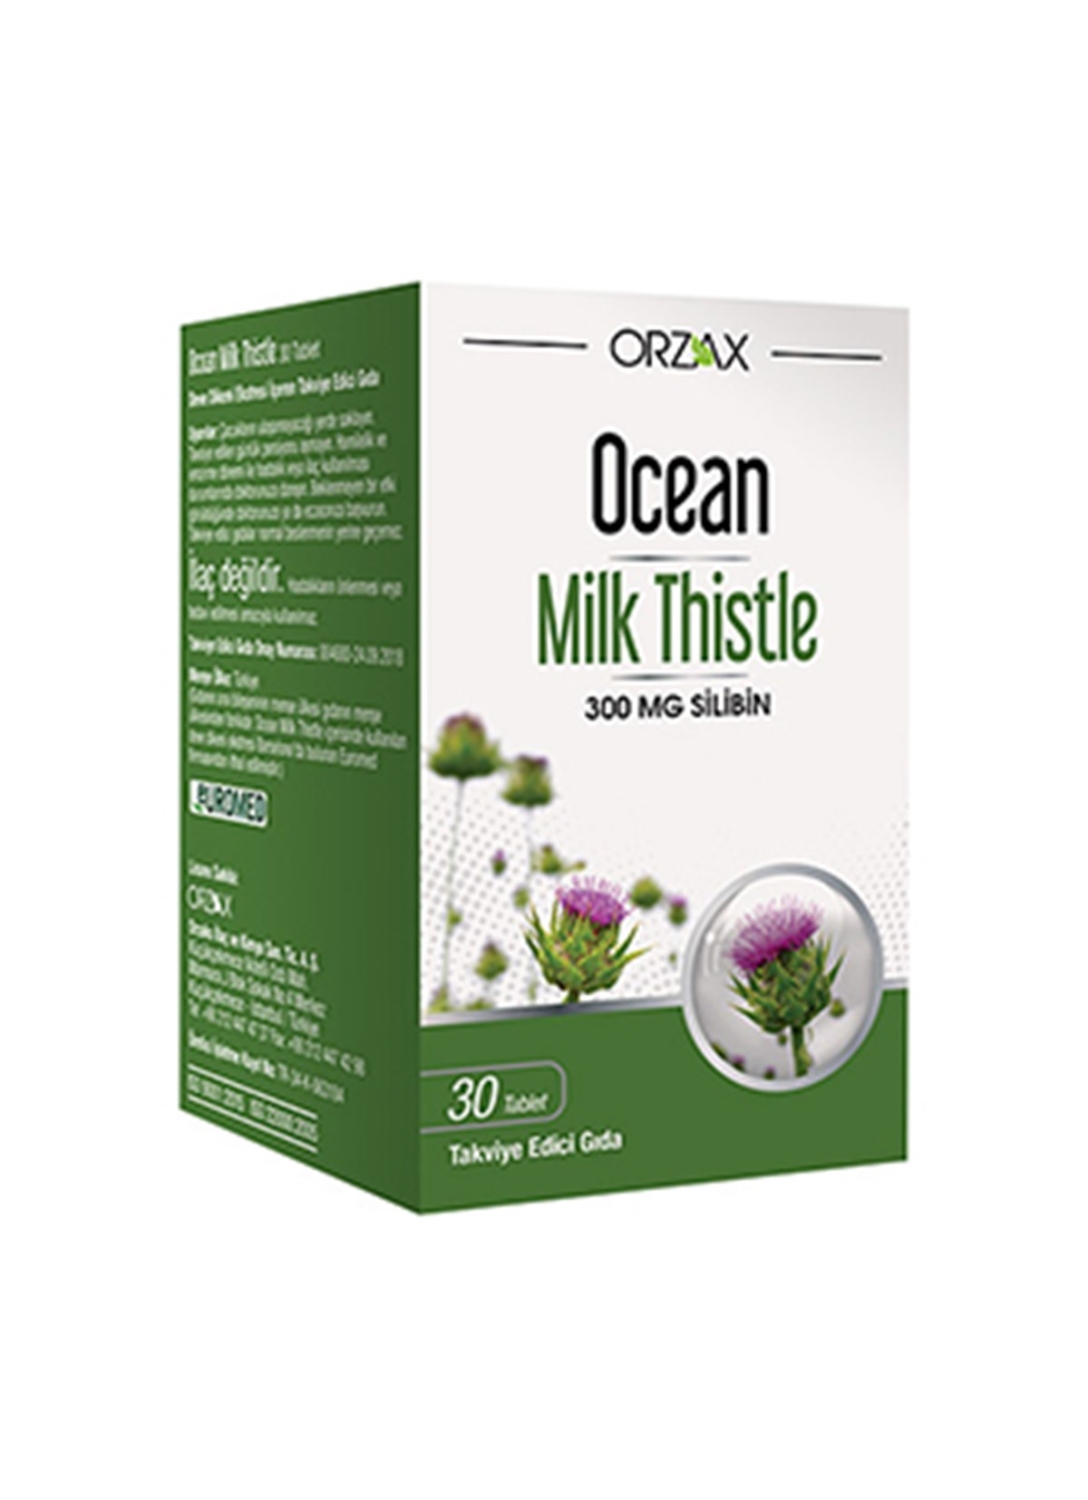 цена Океанский молочный чертополох 30 таблеток ORZAX